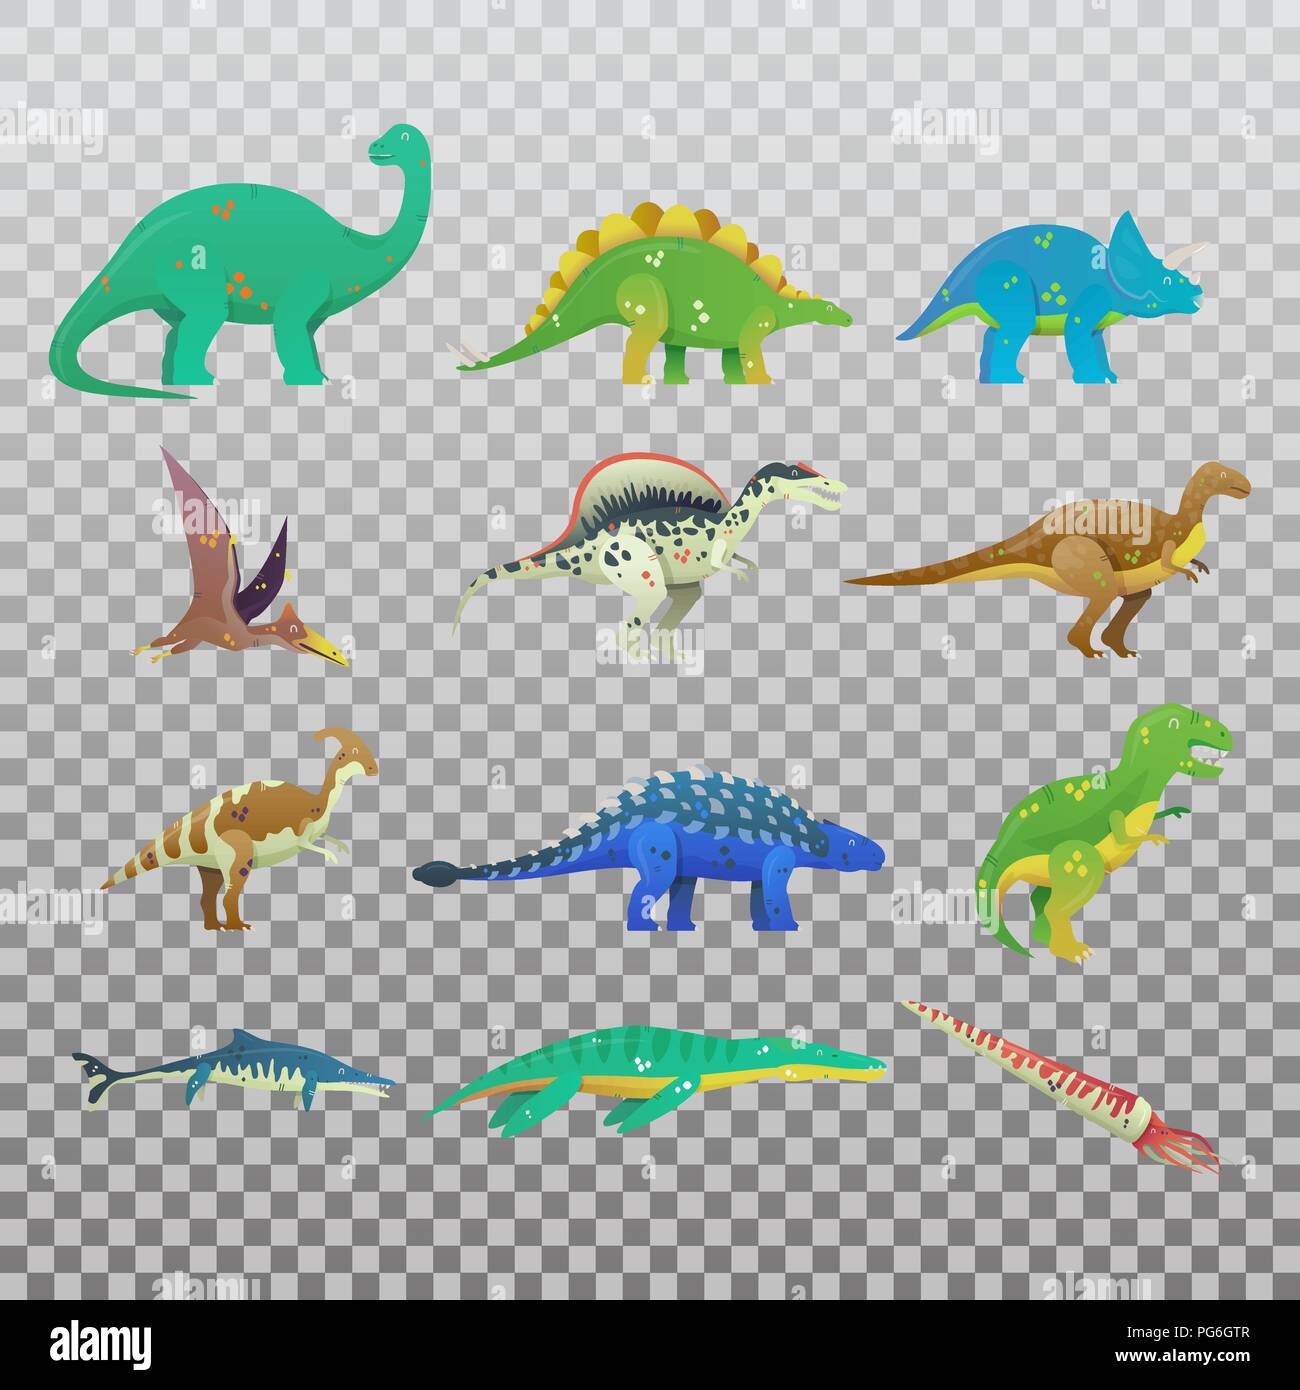 Set of isolated cartoon dinosaur or dino. T rex or t-rex, tyrannosaurus rex and stegosaurus, brachiosaurus and spinosaurus dino, cartoon saichania and pterodactyloidea dinosaur icon. Jurassic theme Stock Vector